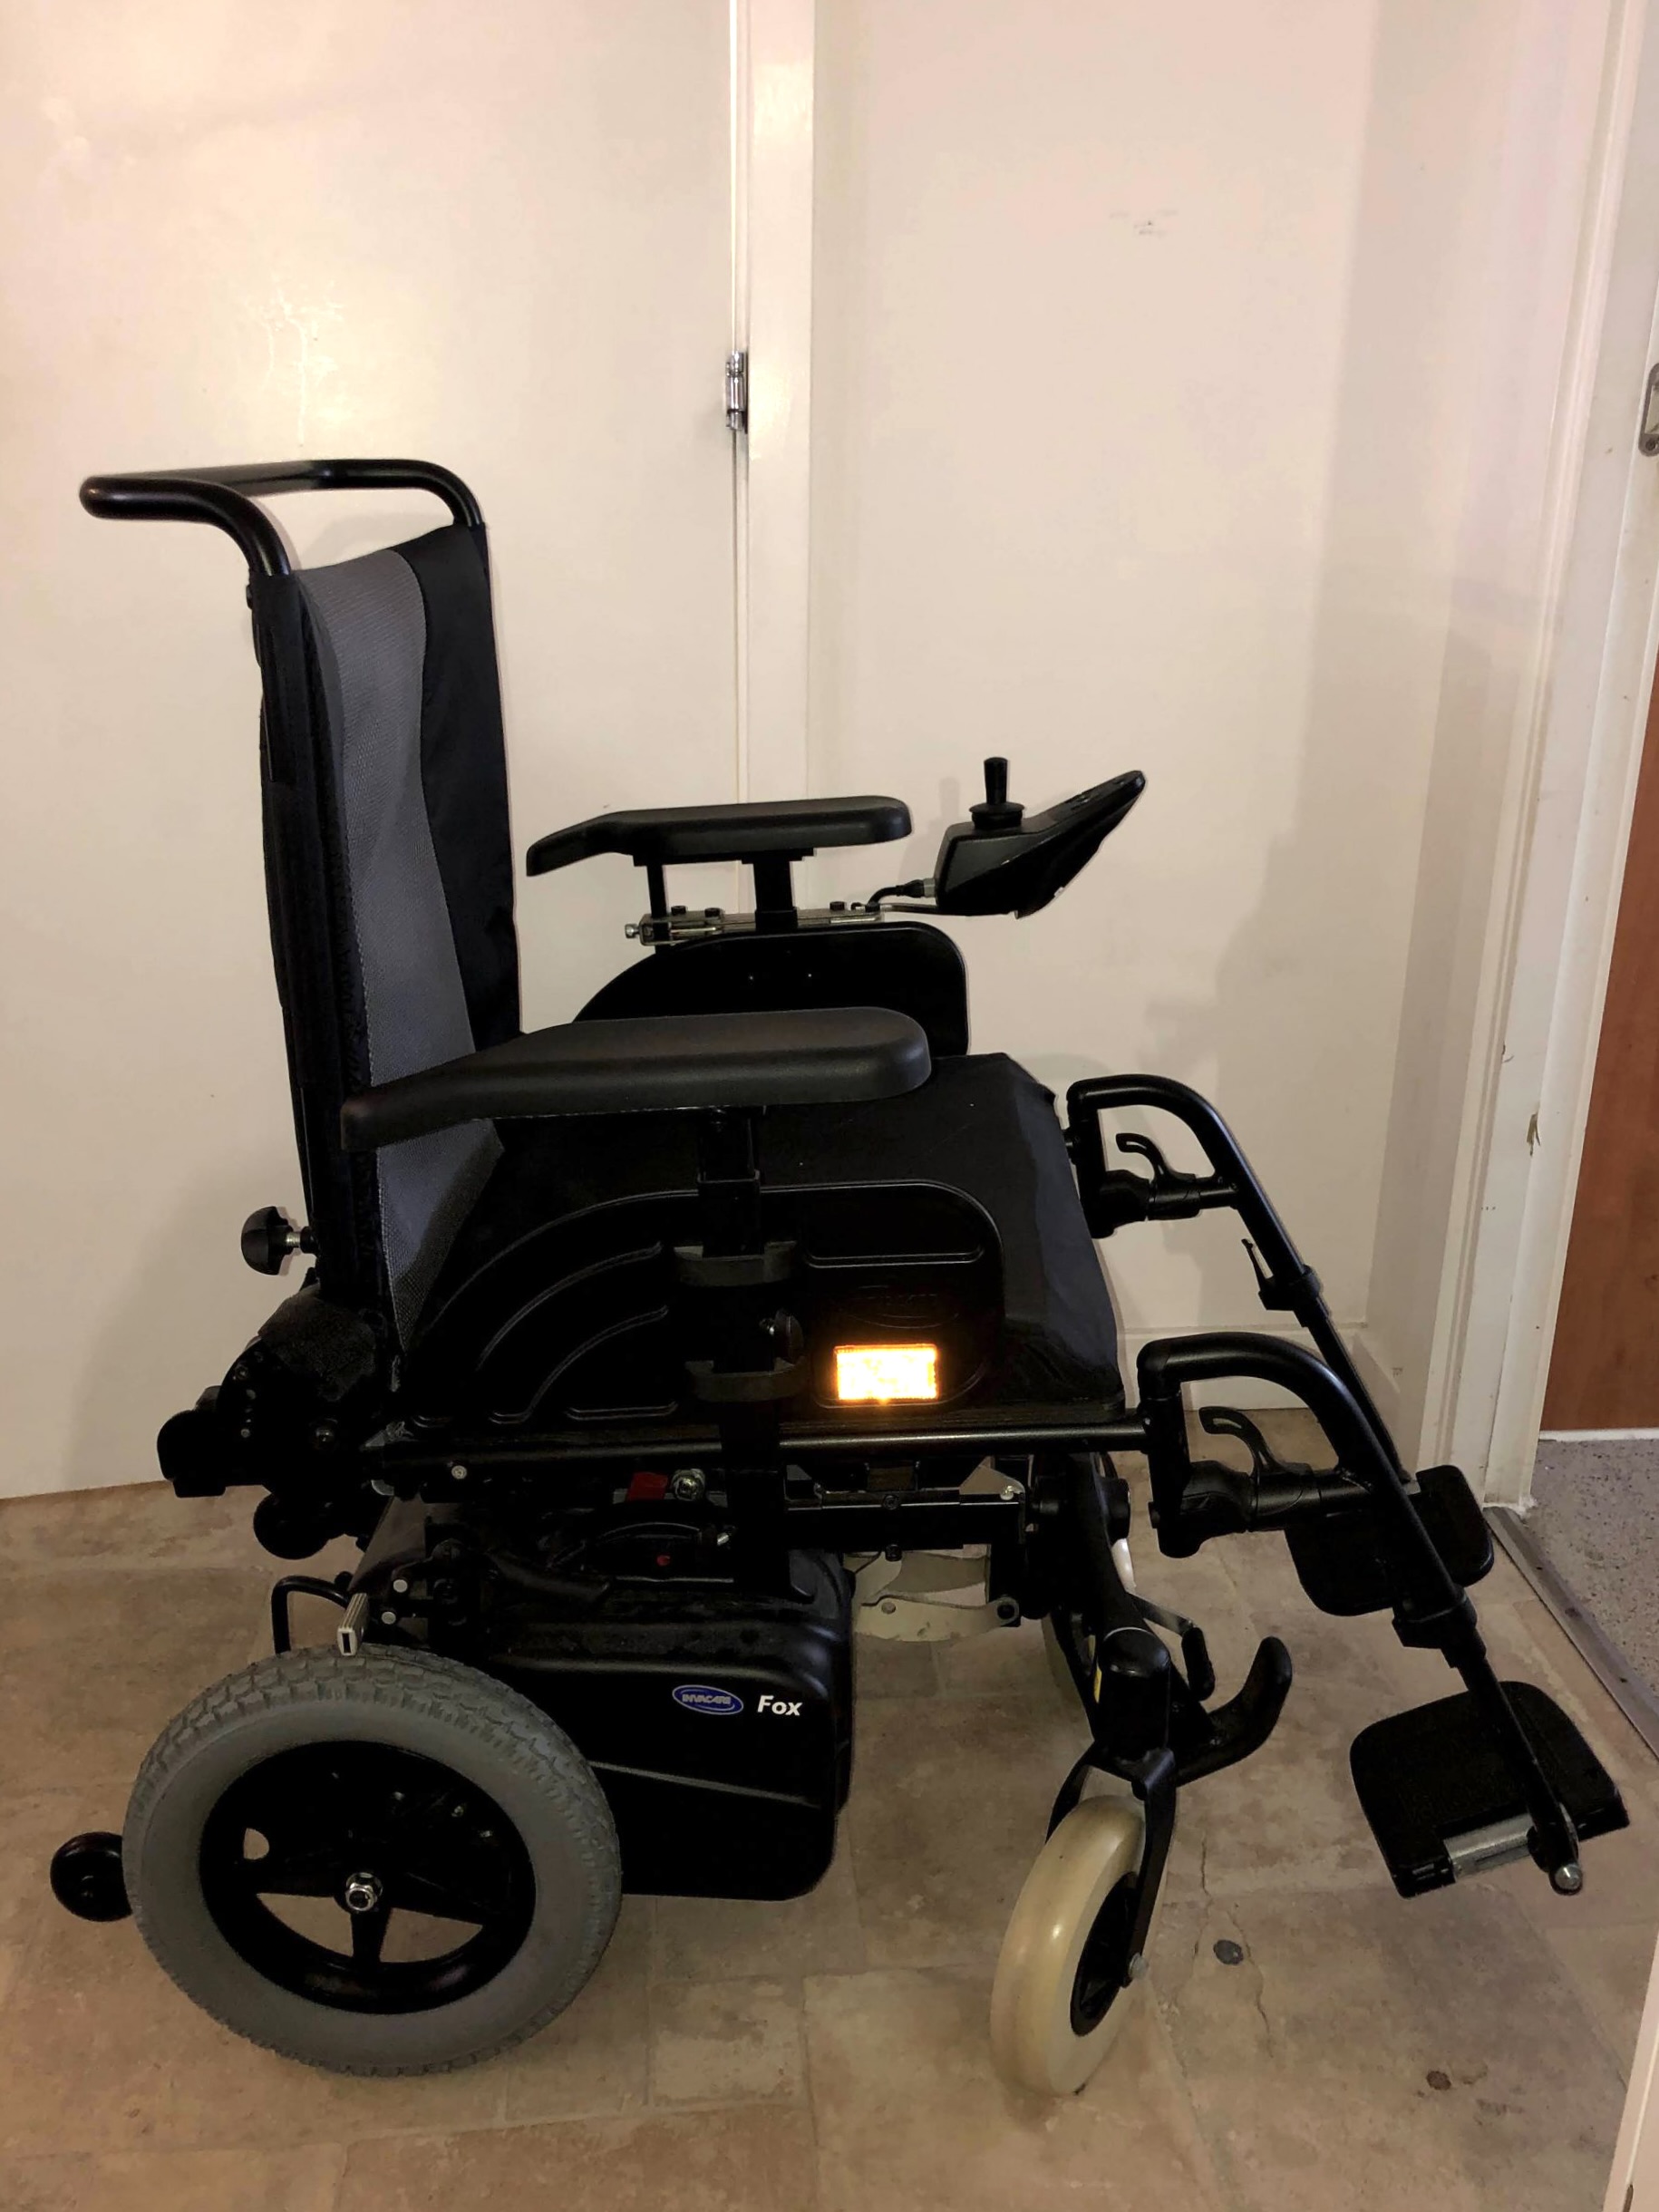 Invacare Fox – Powered Wheelchair